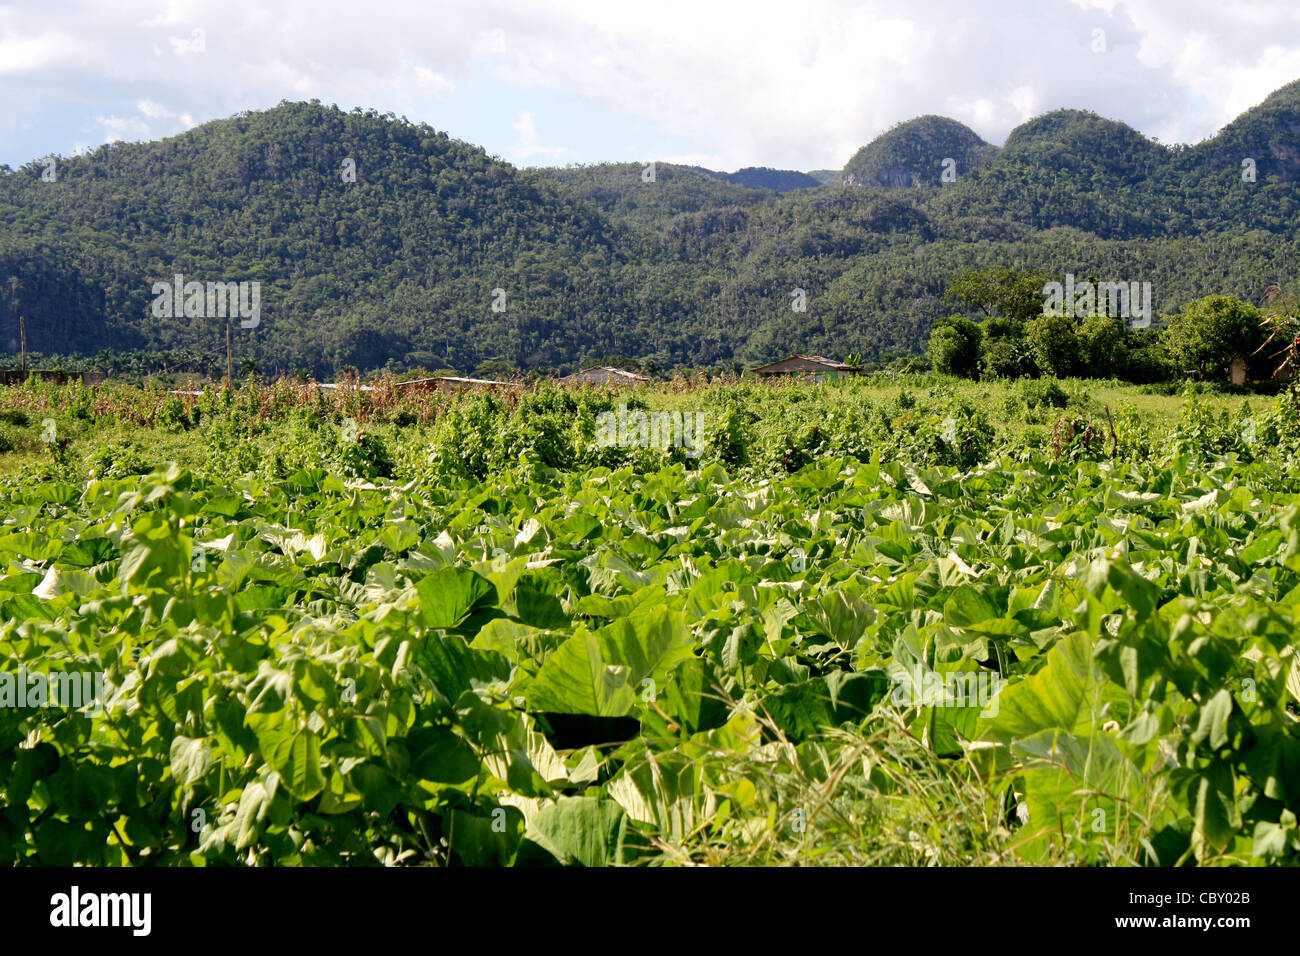 A tabacco field in Vinales, Cuba Stock Photo